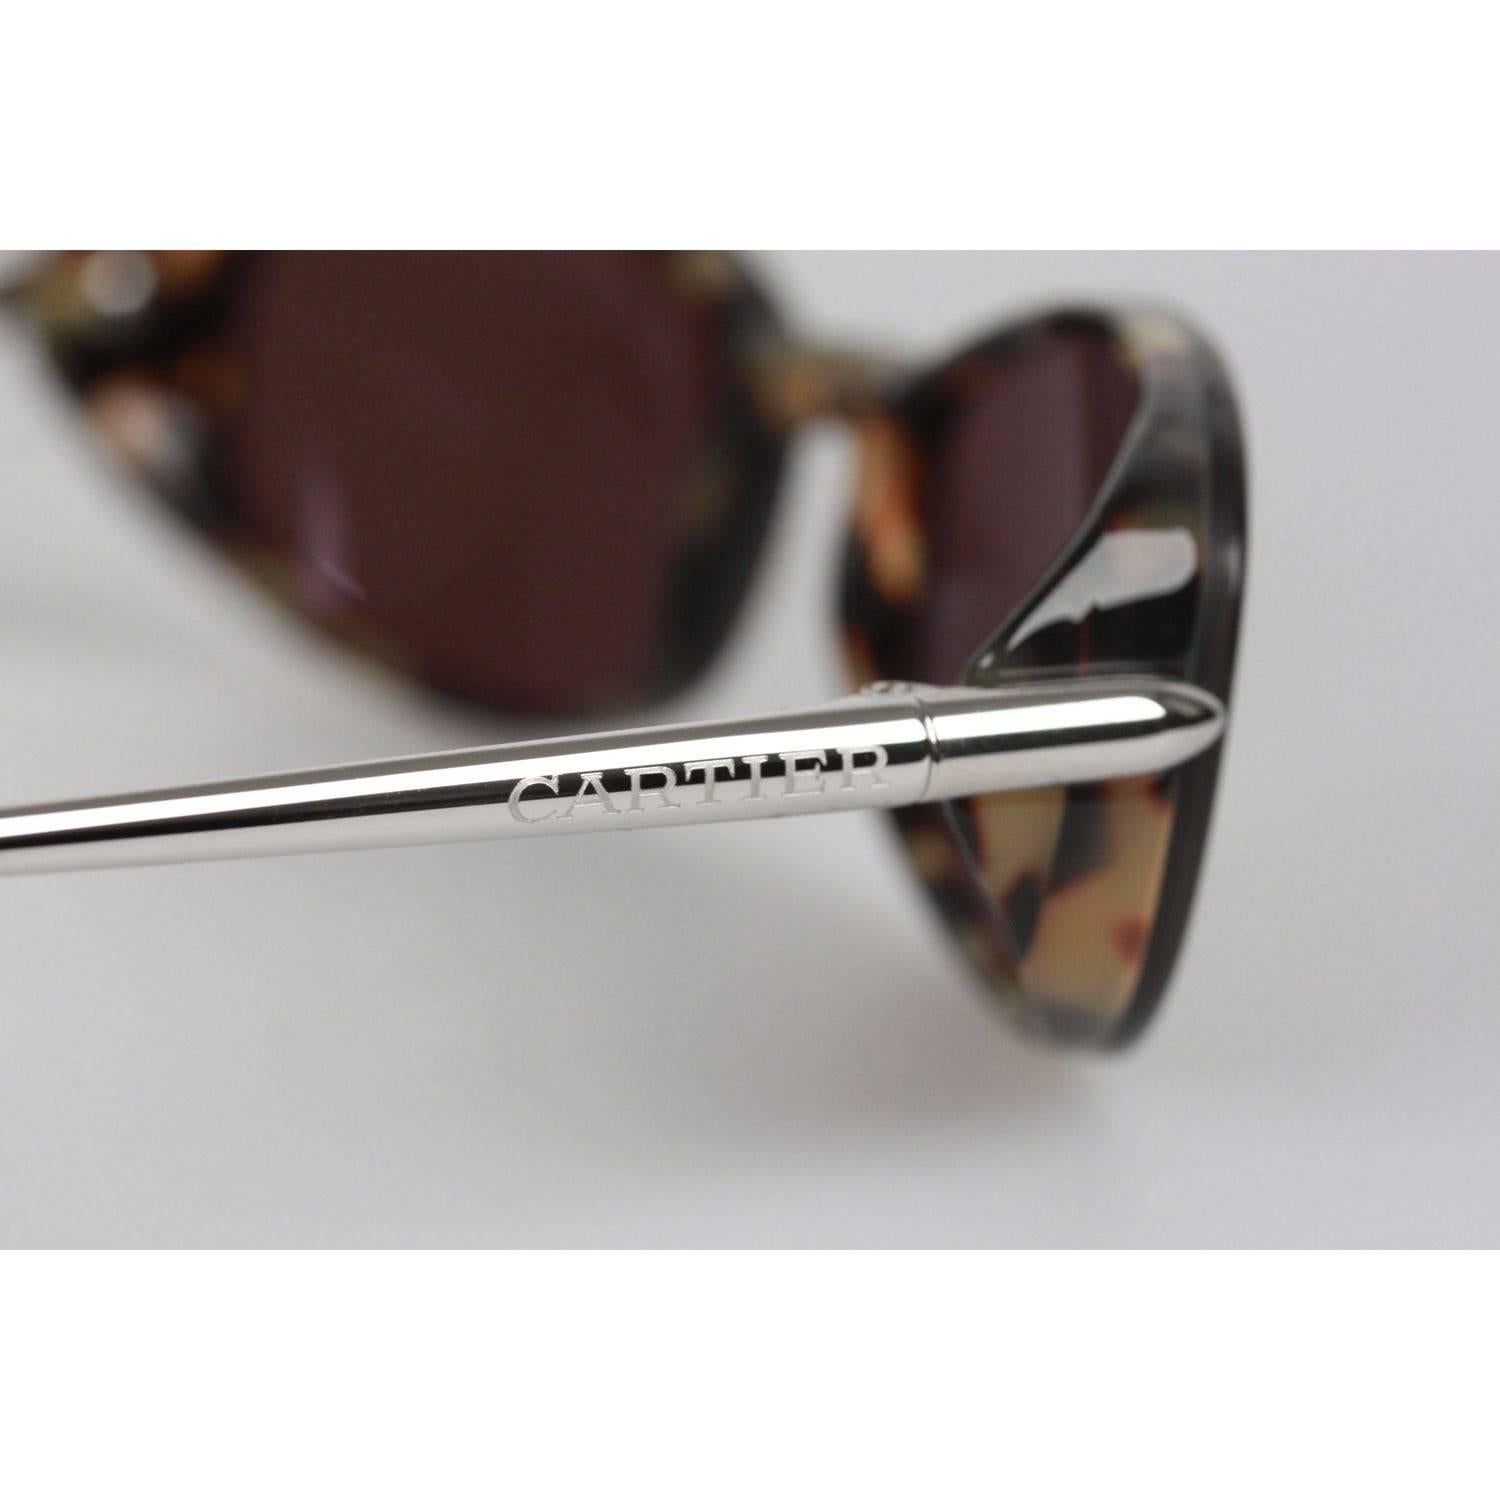 CARTIER Paris Brown Rectangular Small Sunglasses 53-19 135mm NOS 1